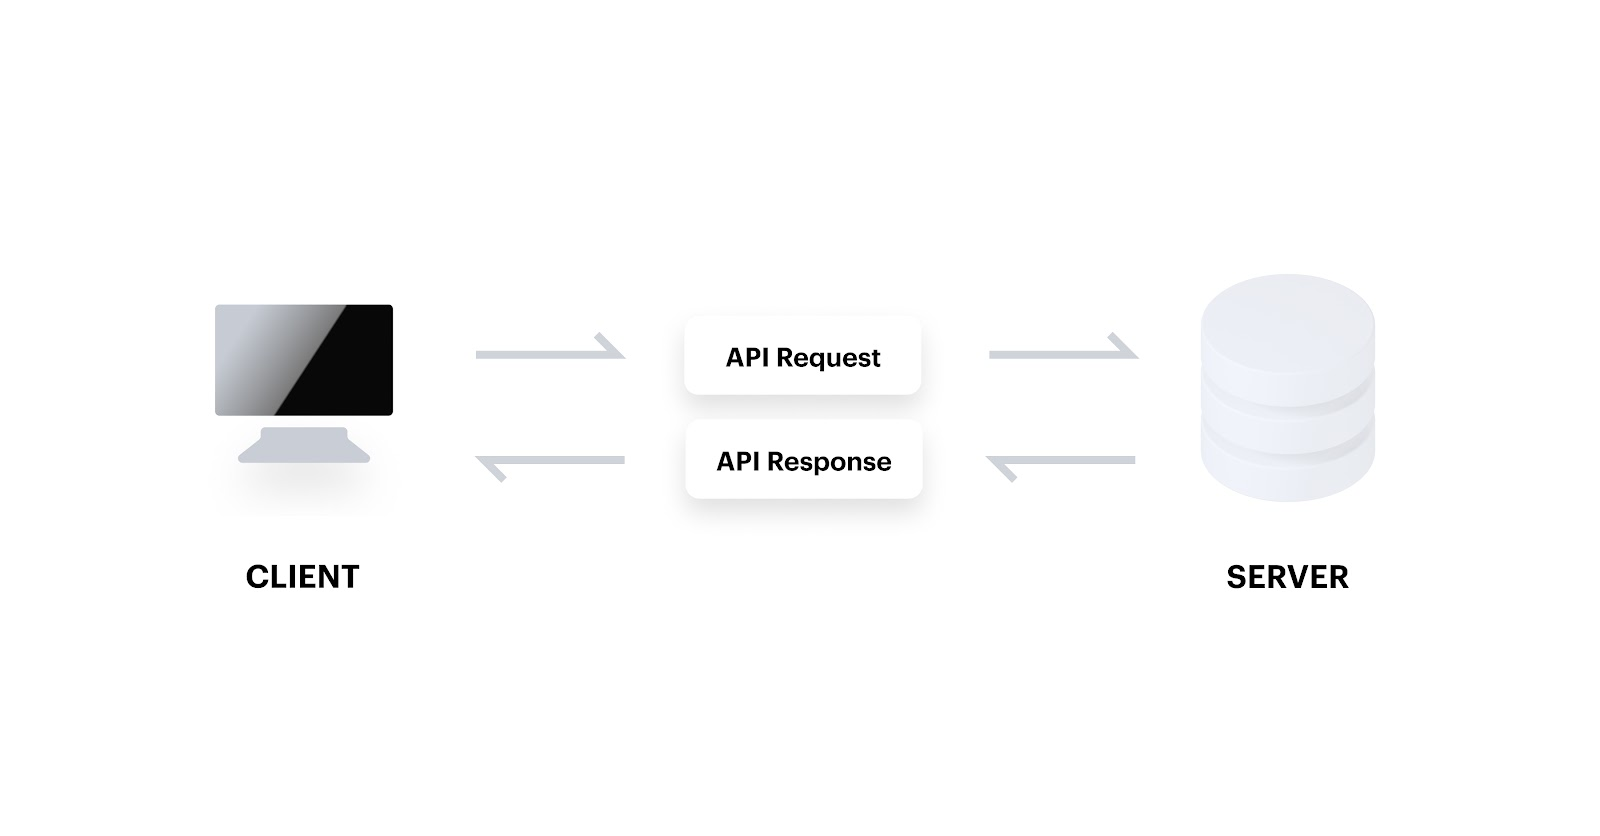 A visualization of an API call